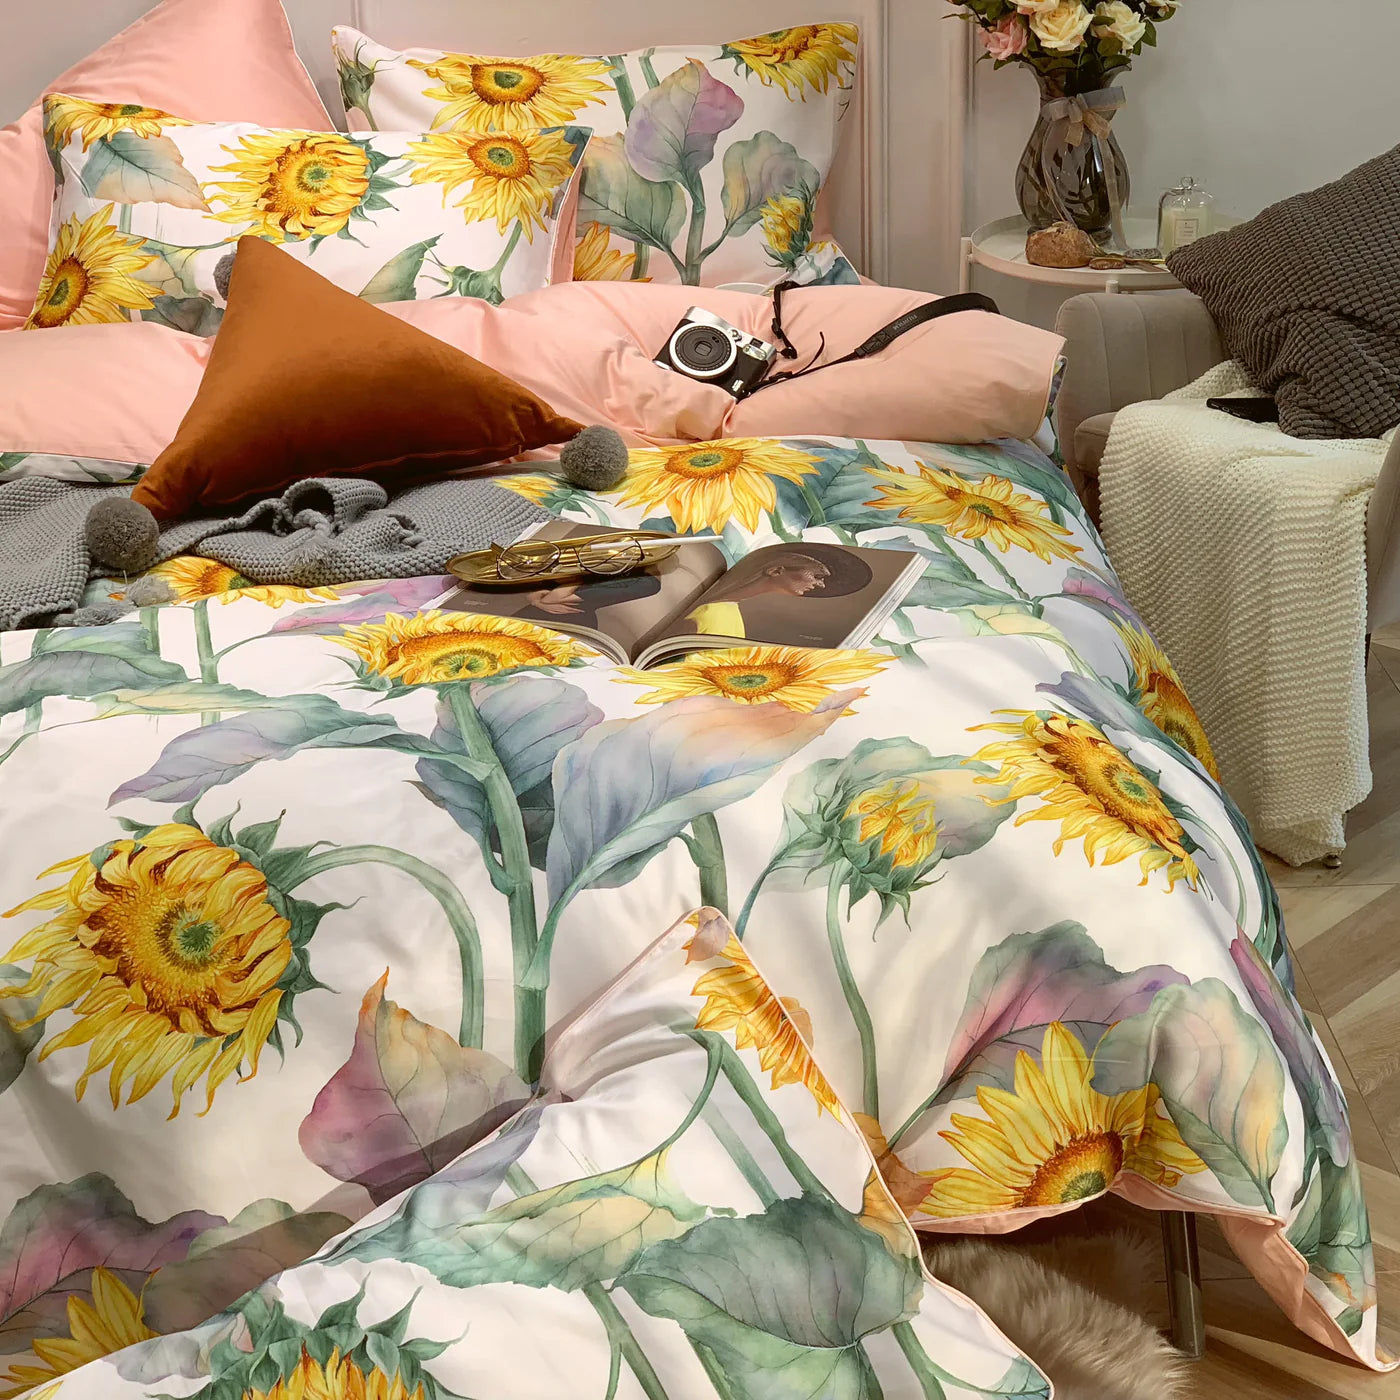 Bed linen sunflowers (100% Egyptian cotton)